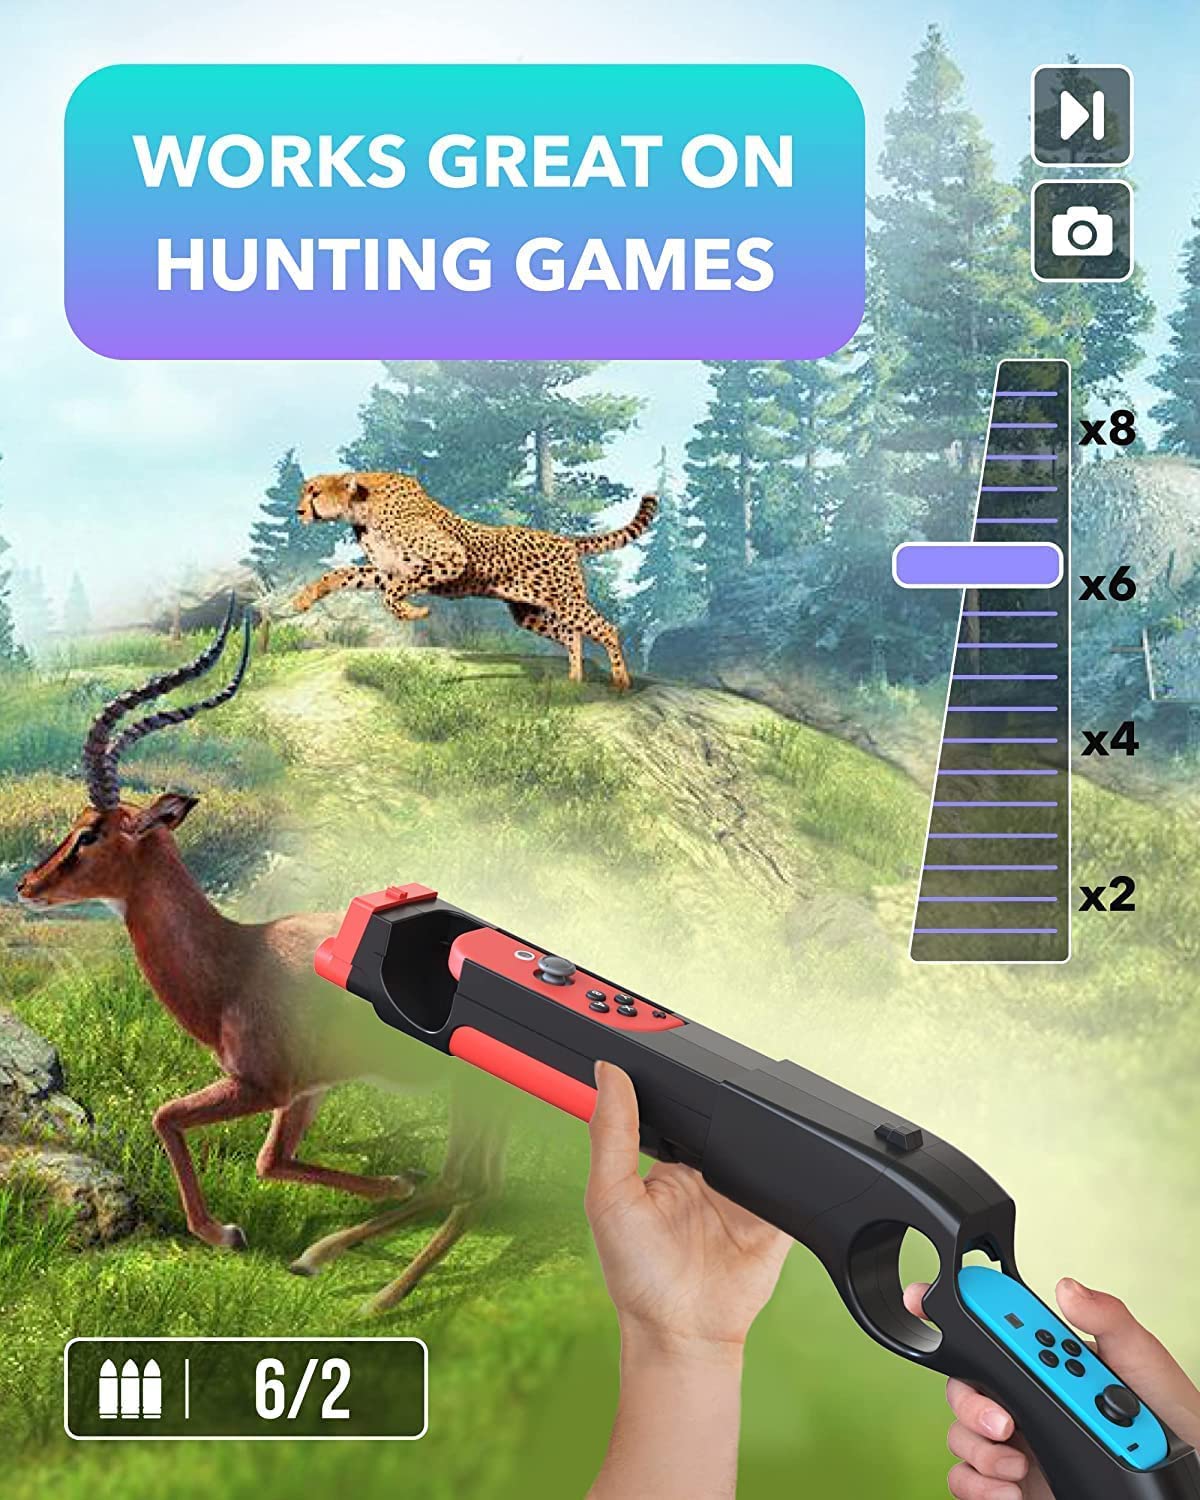 Switch Shooting Game Hunting Gun for Nintendo Switch OLED Joycon Controller, Kethvoz Gun Grip for Nintendo Switch Shooter Games Splatoon 2 Wolfenstein II Hunting Simulator Fortnite